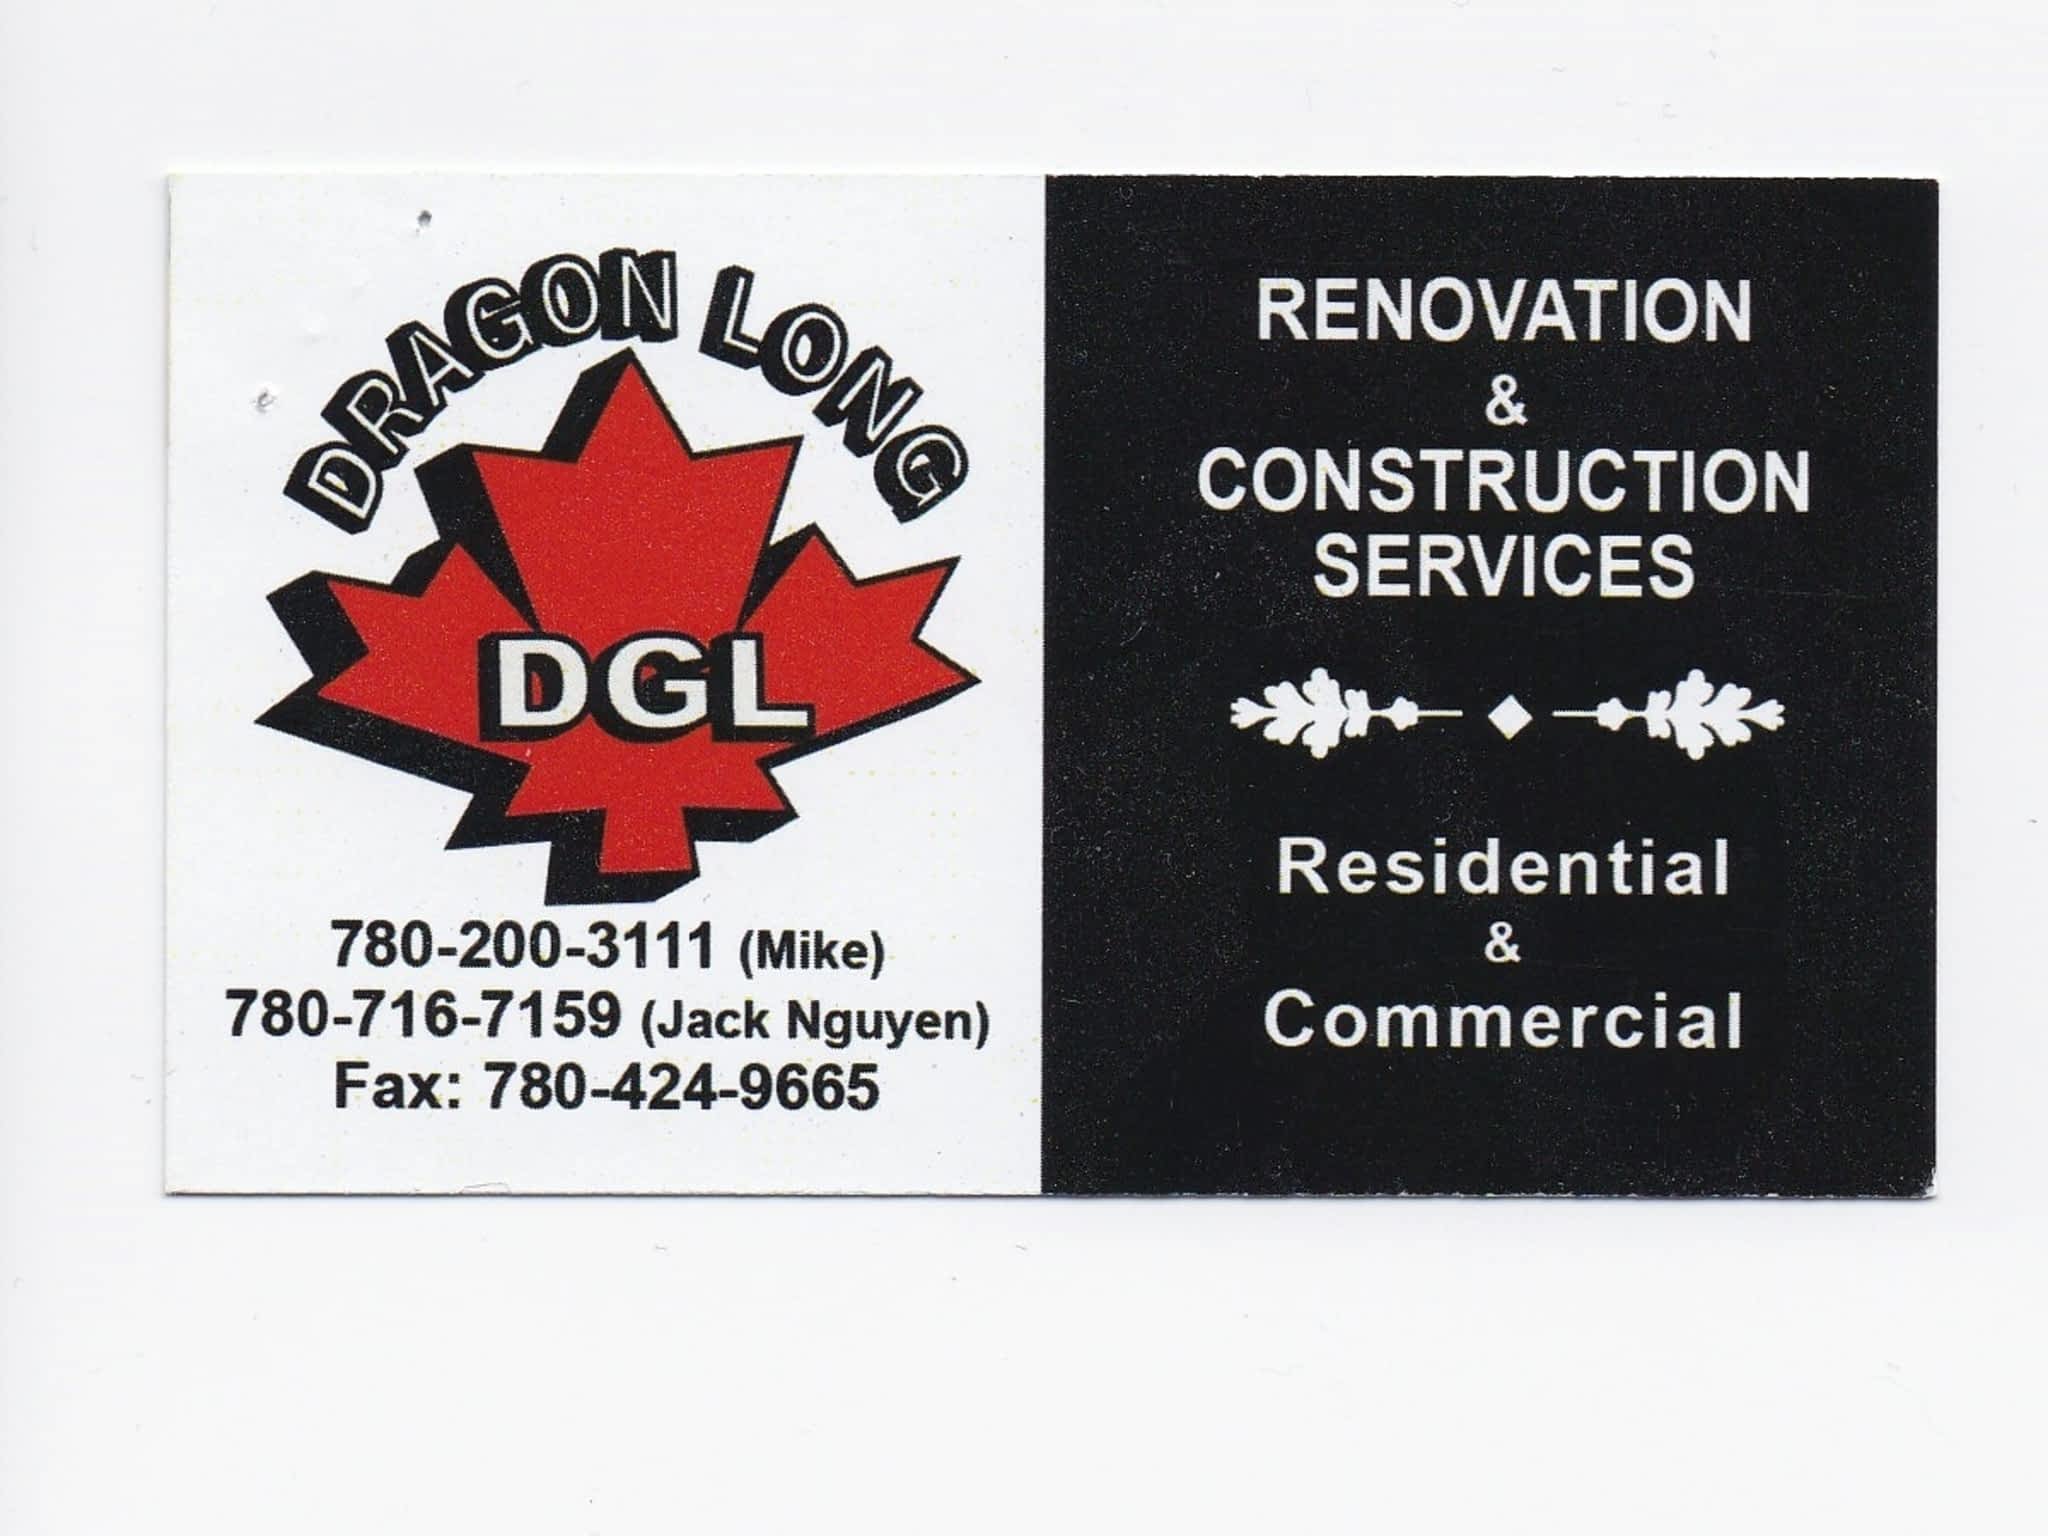 photo Dragon Long Construction Renovation Services